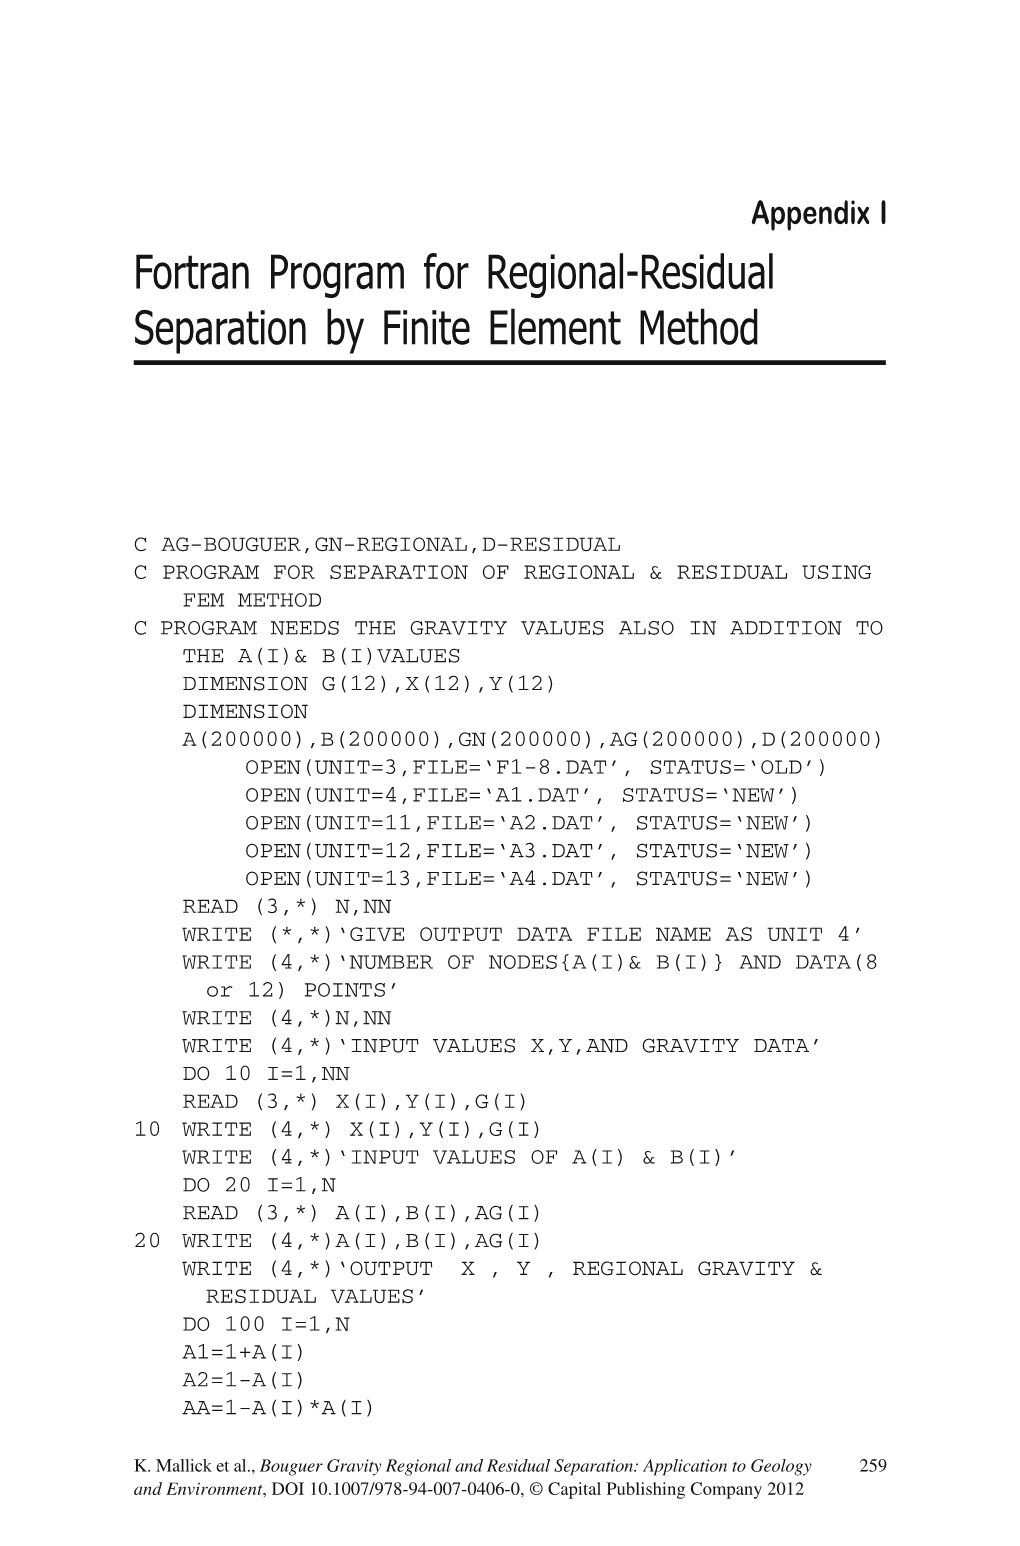 Fortran Program for Regional-Residual Separation by Finite Element Method